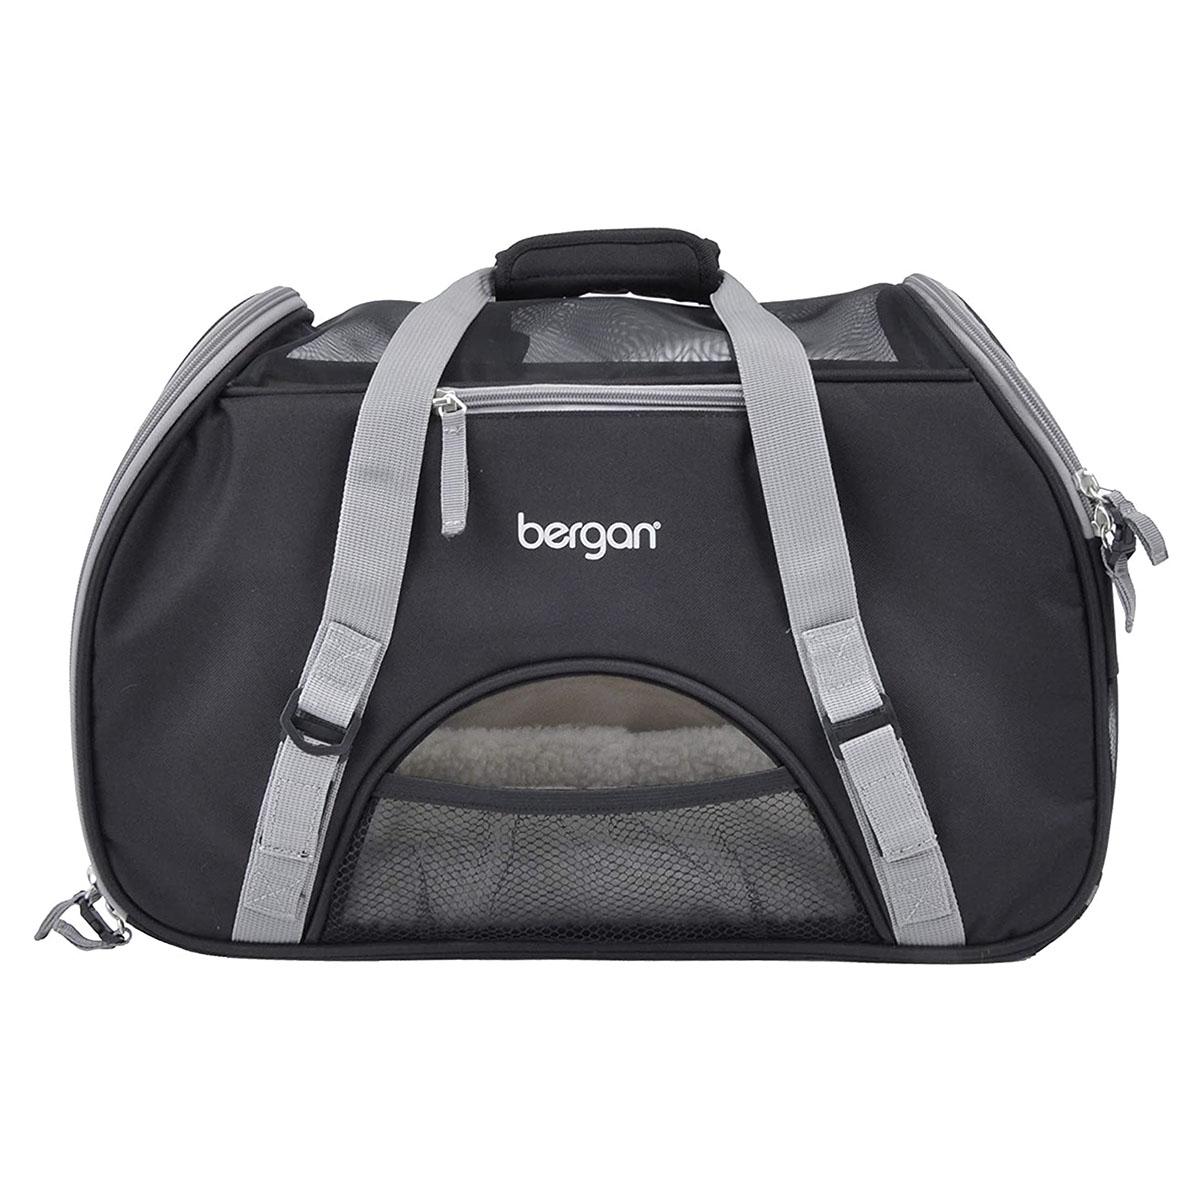 Bergan Comfort Pet Carrier - Black and Grey